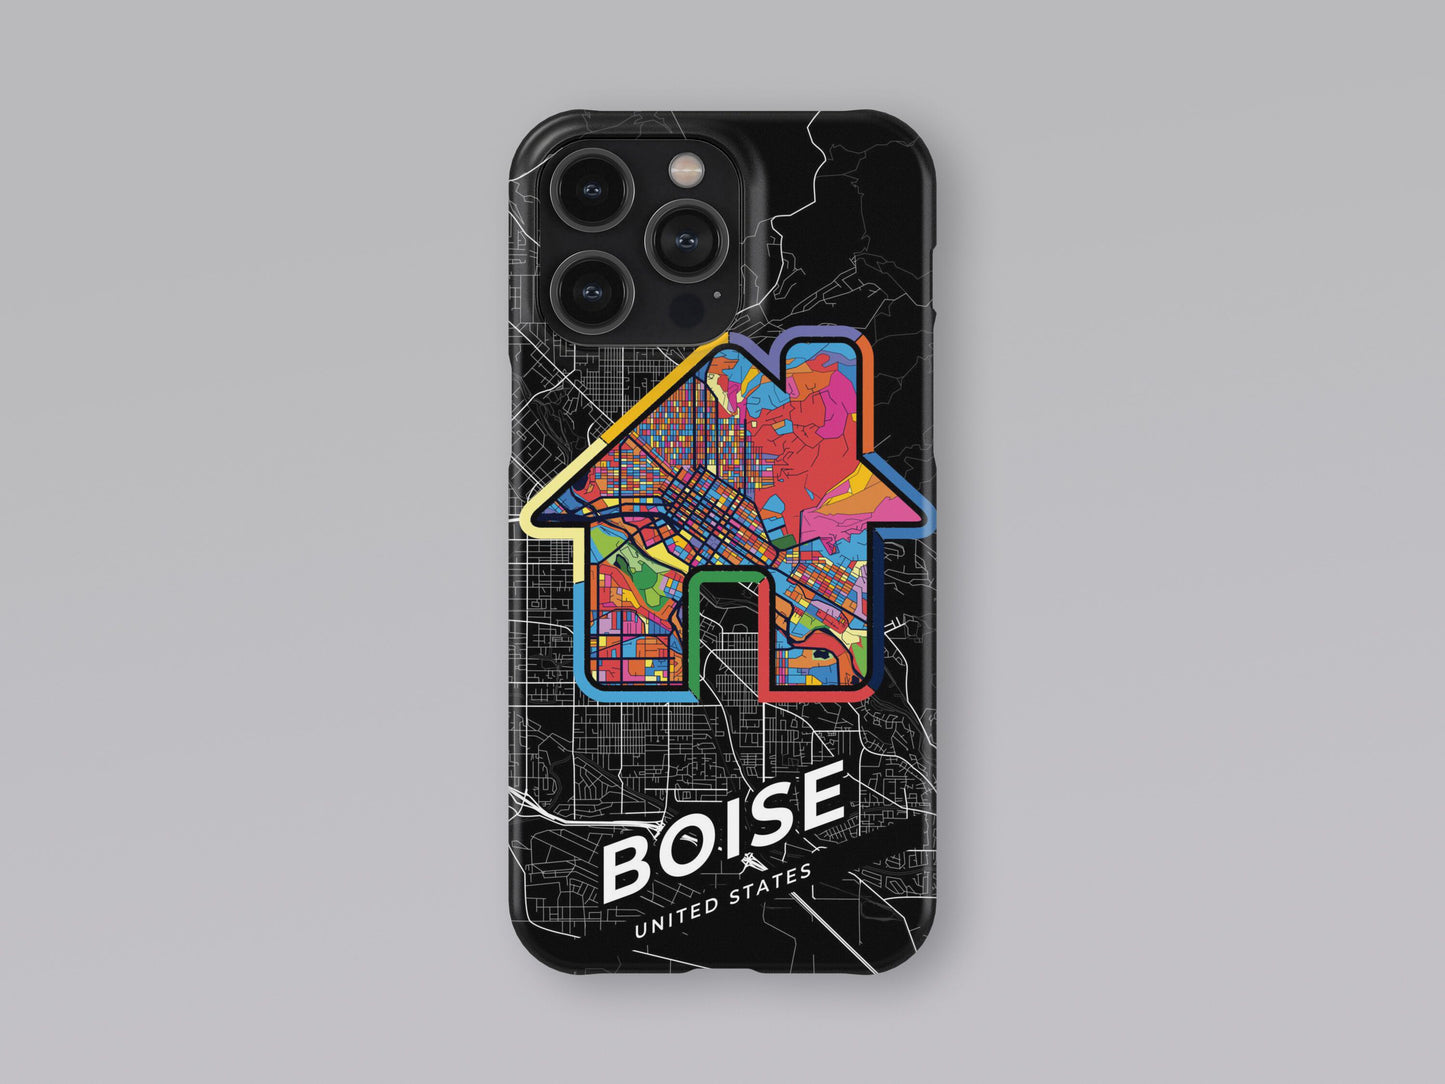 Boise Idaho slim phone case with colorful icon. Birthday, wedding or housewarming gift. Couple match cases. 3